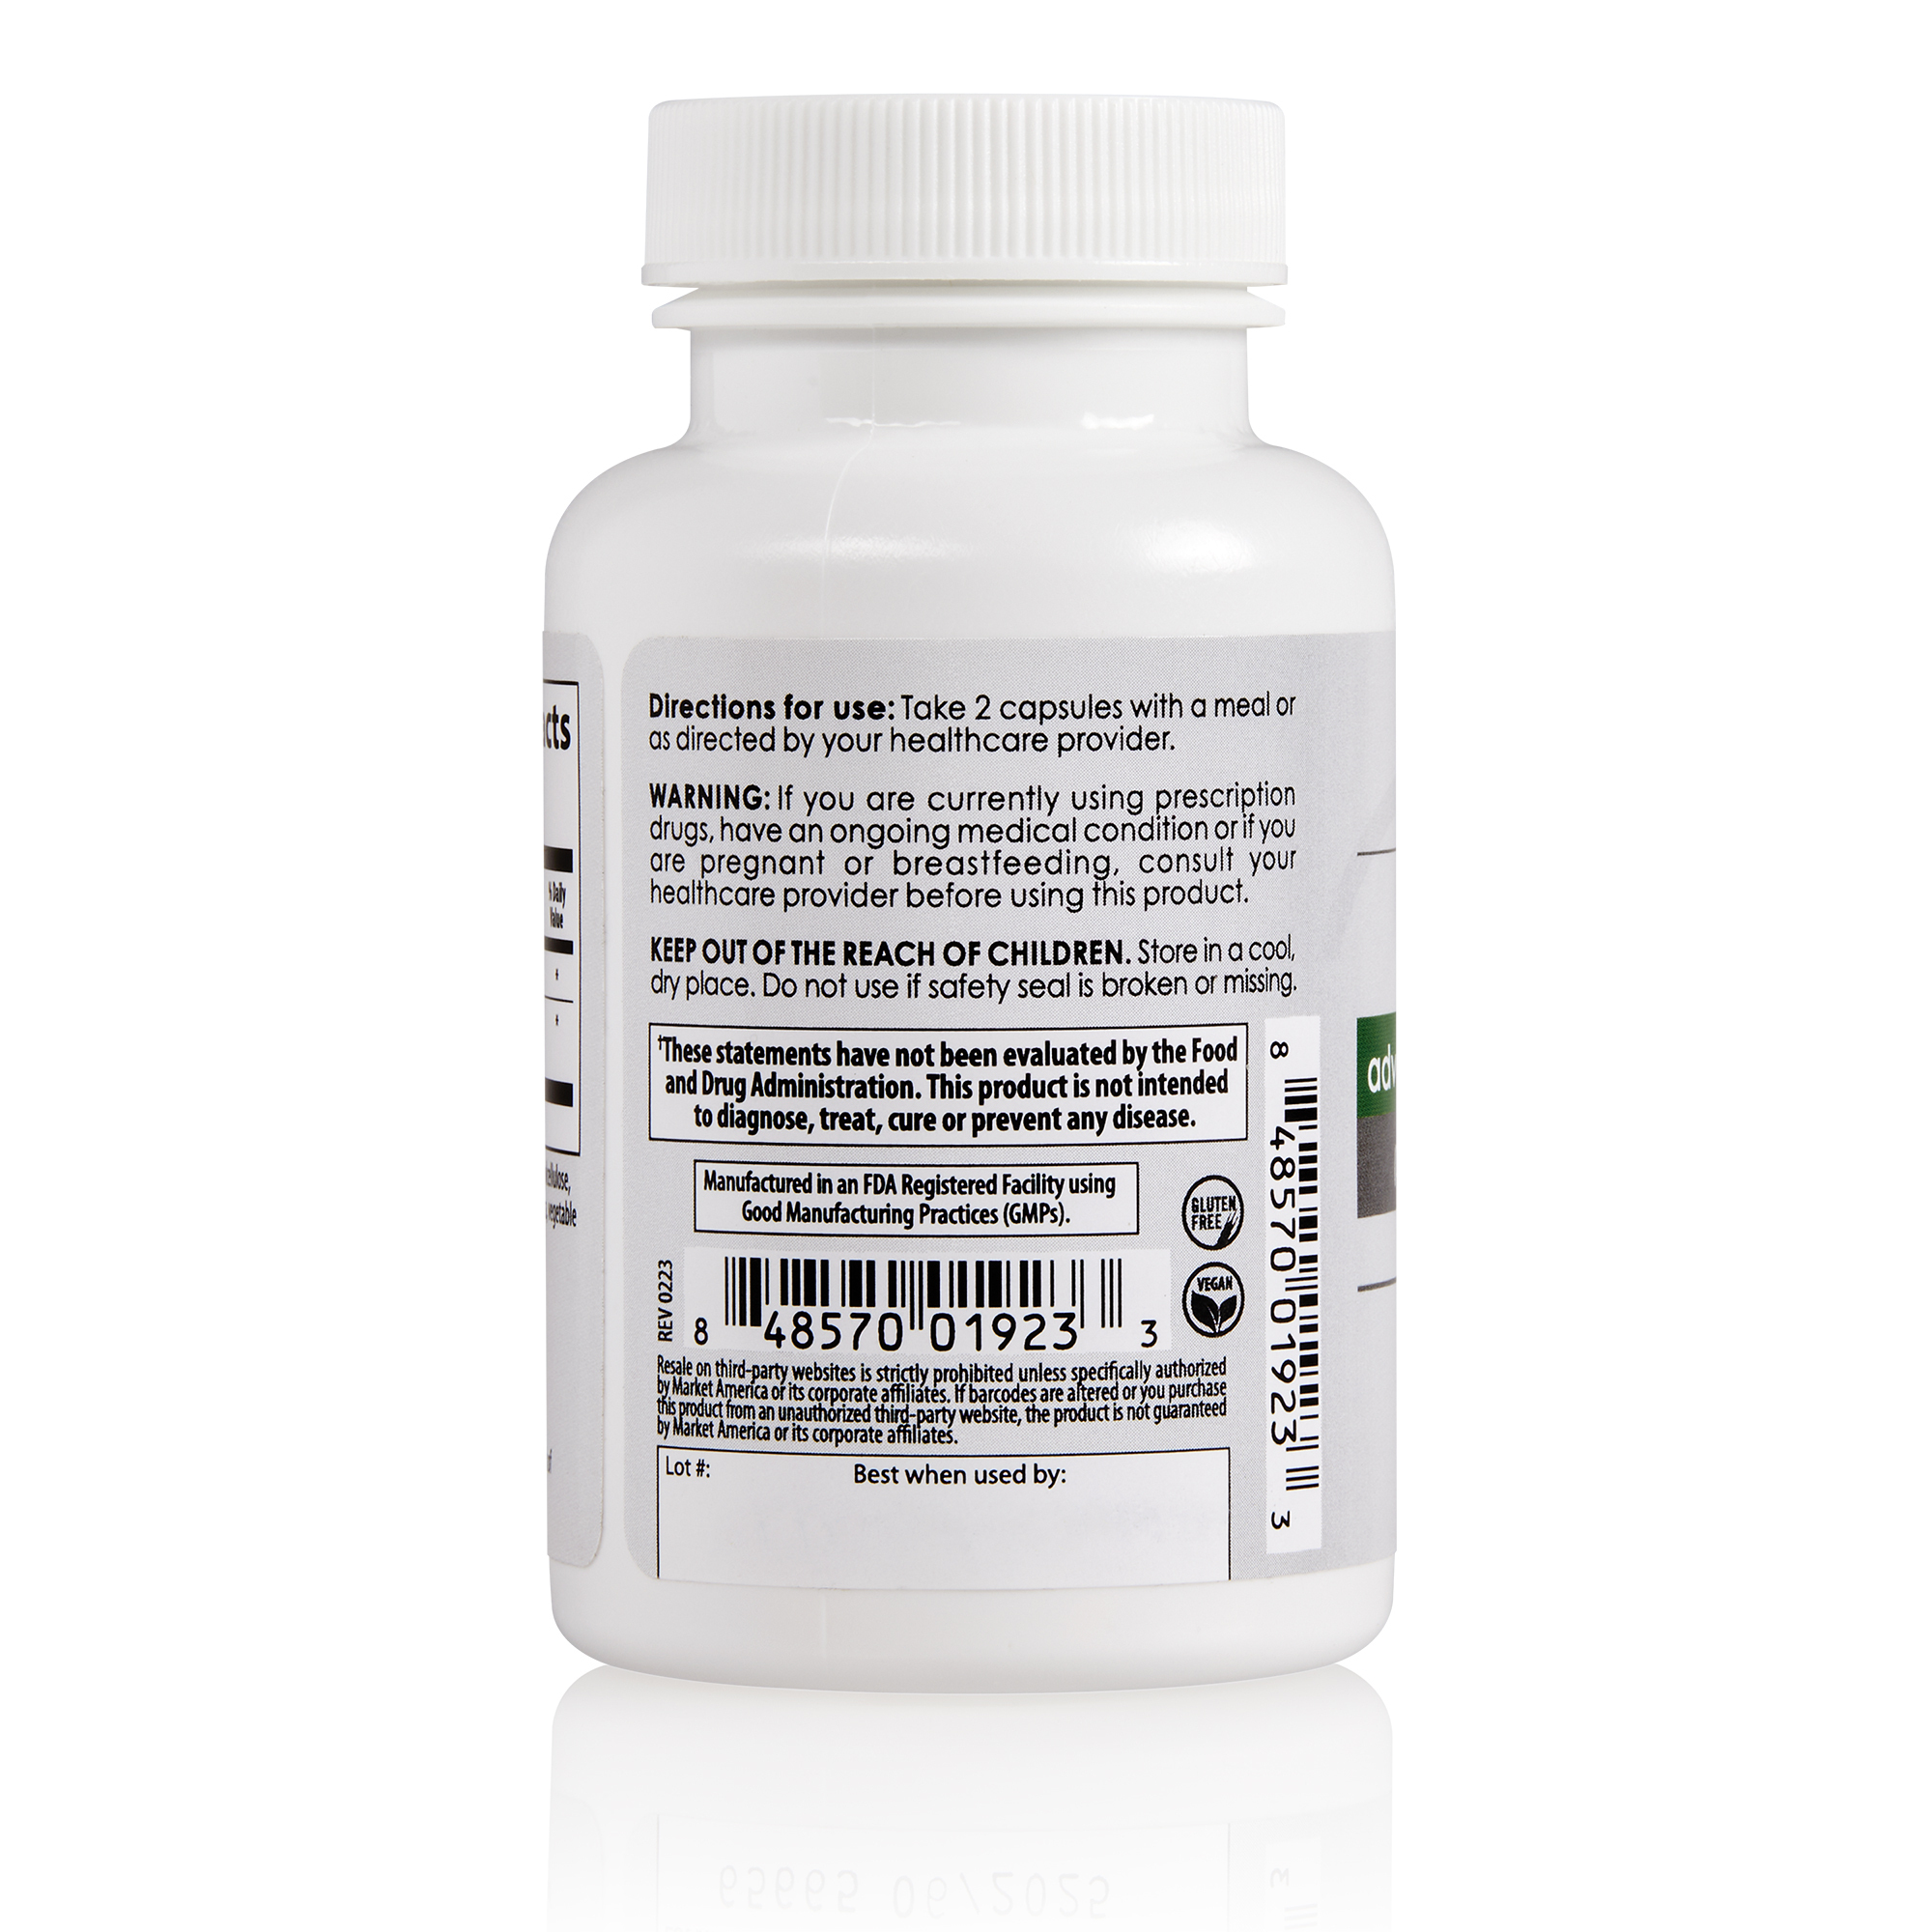 nutraMetrix® PRIME™ Advanced Digestive Support